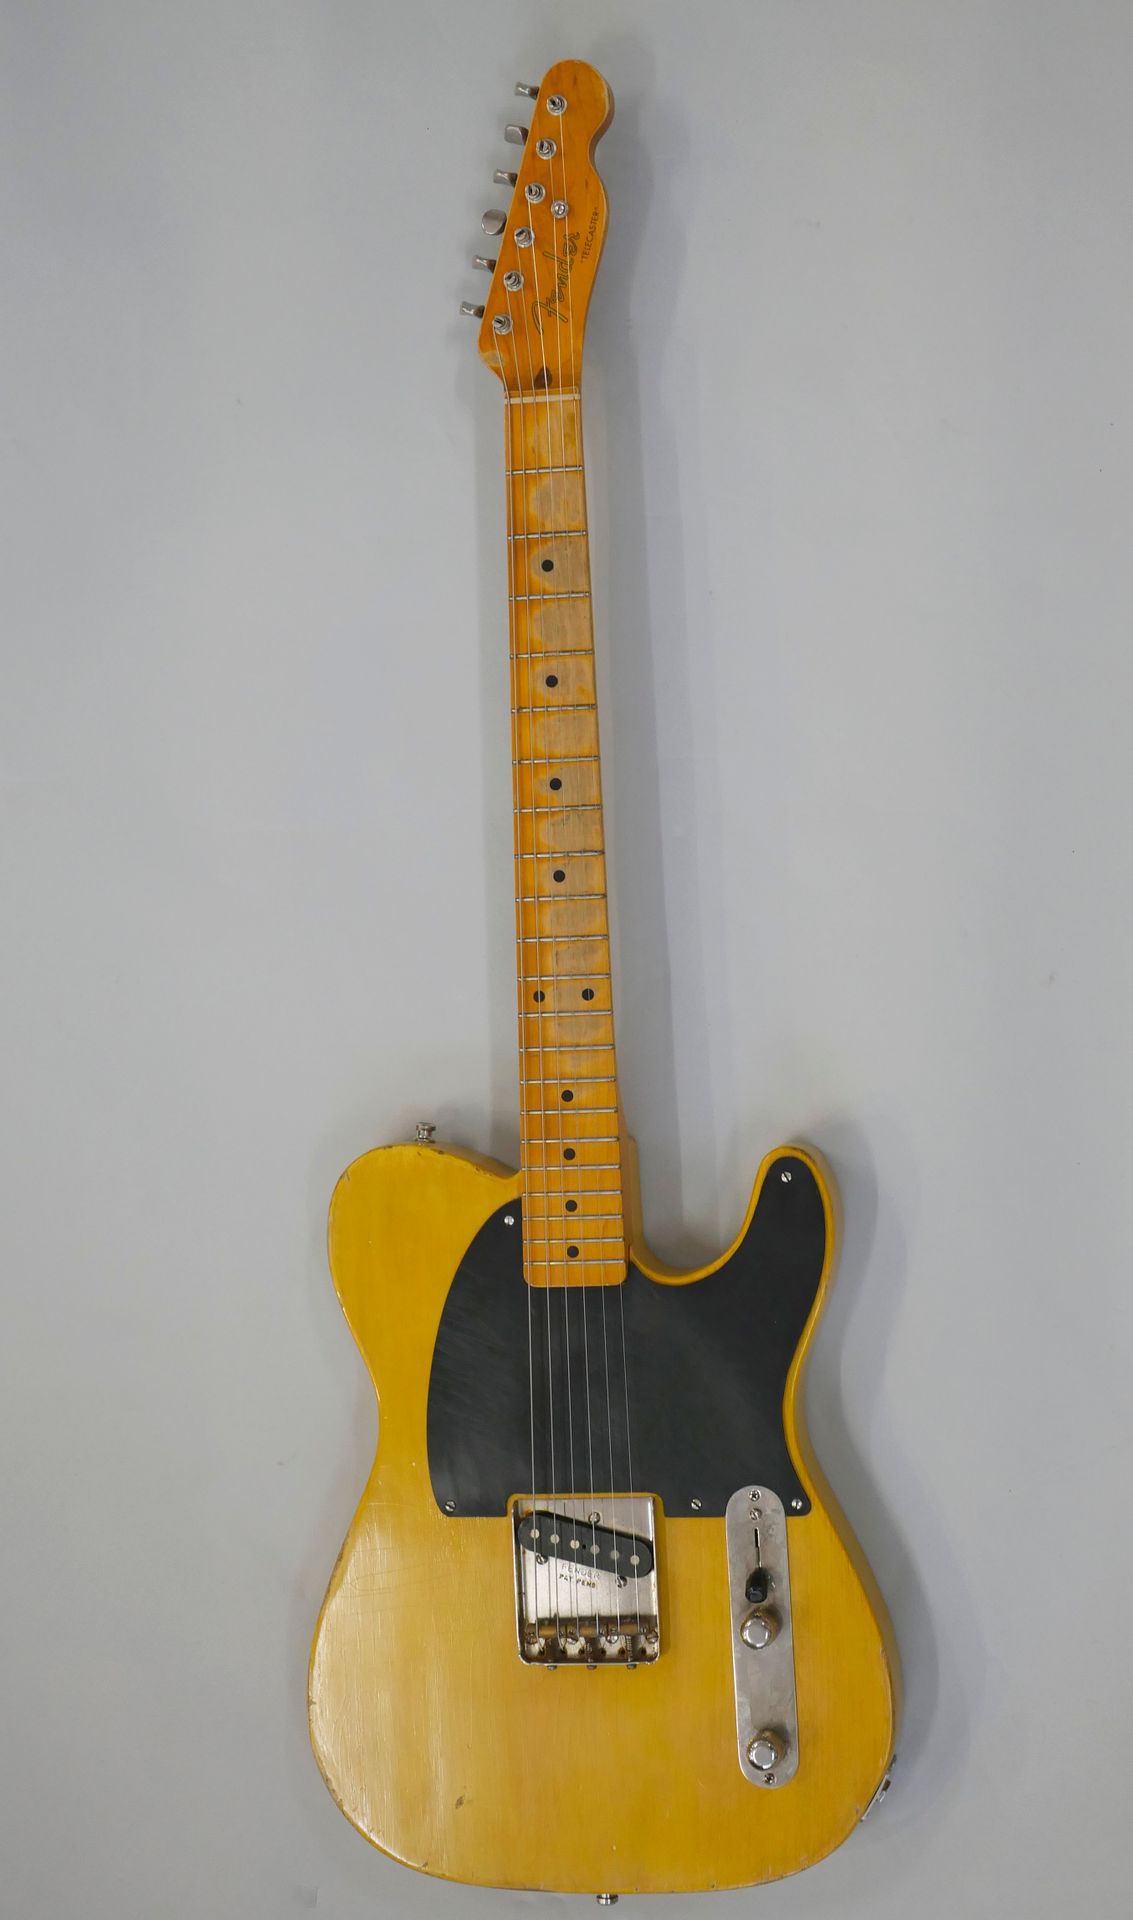 Null 实体Telecaster电吉他在Guitarbuild.Co.Uk制造。

状况良好，可以演奏，金黄色漆面，黑色护板。使用痕迹，硬盒。